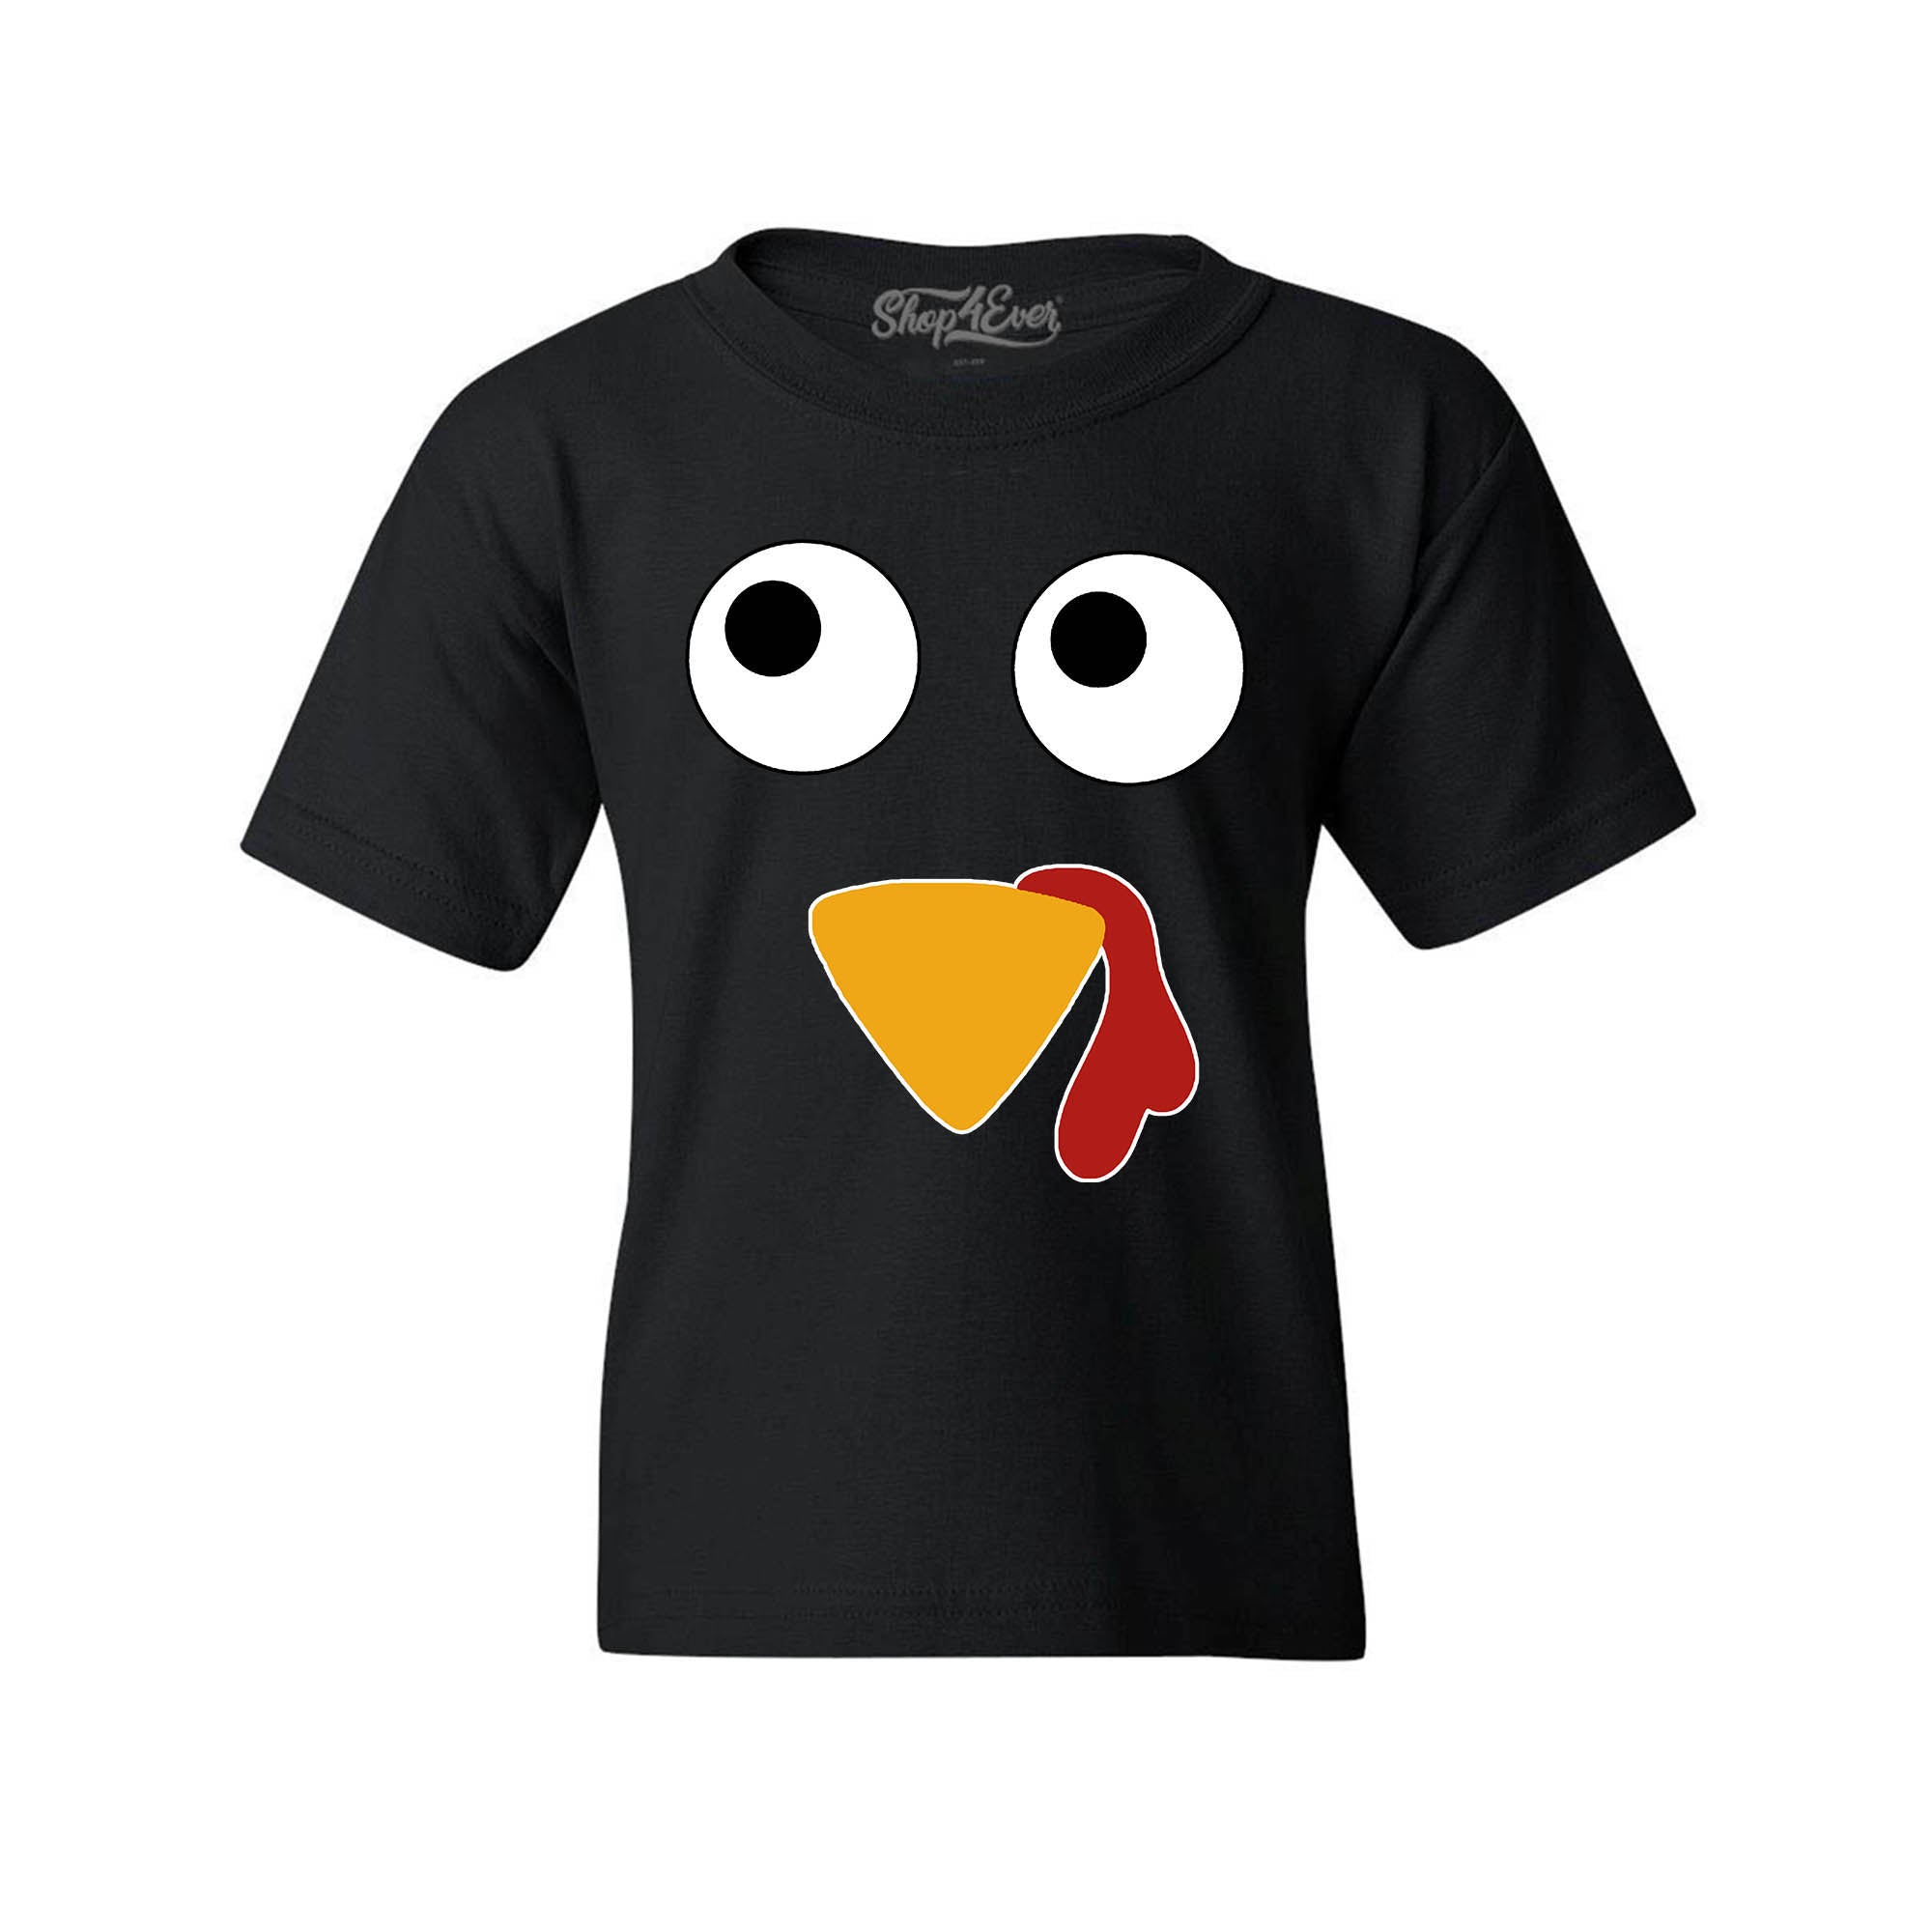 Turkey Face Youth's T-Shirt Thanksgiving Shirts